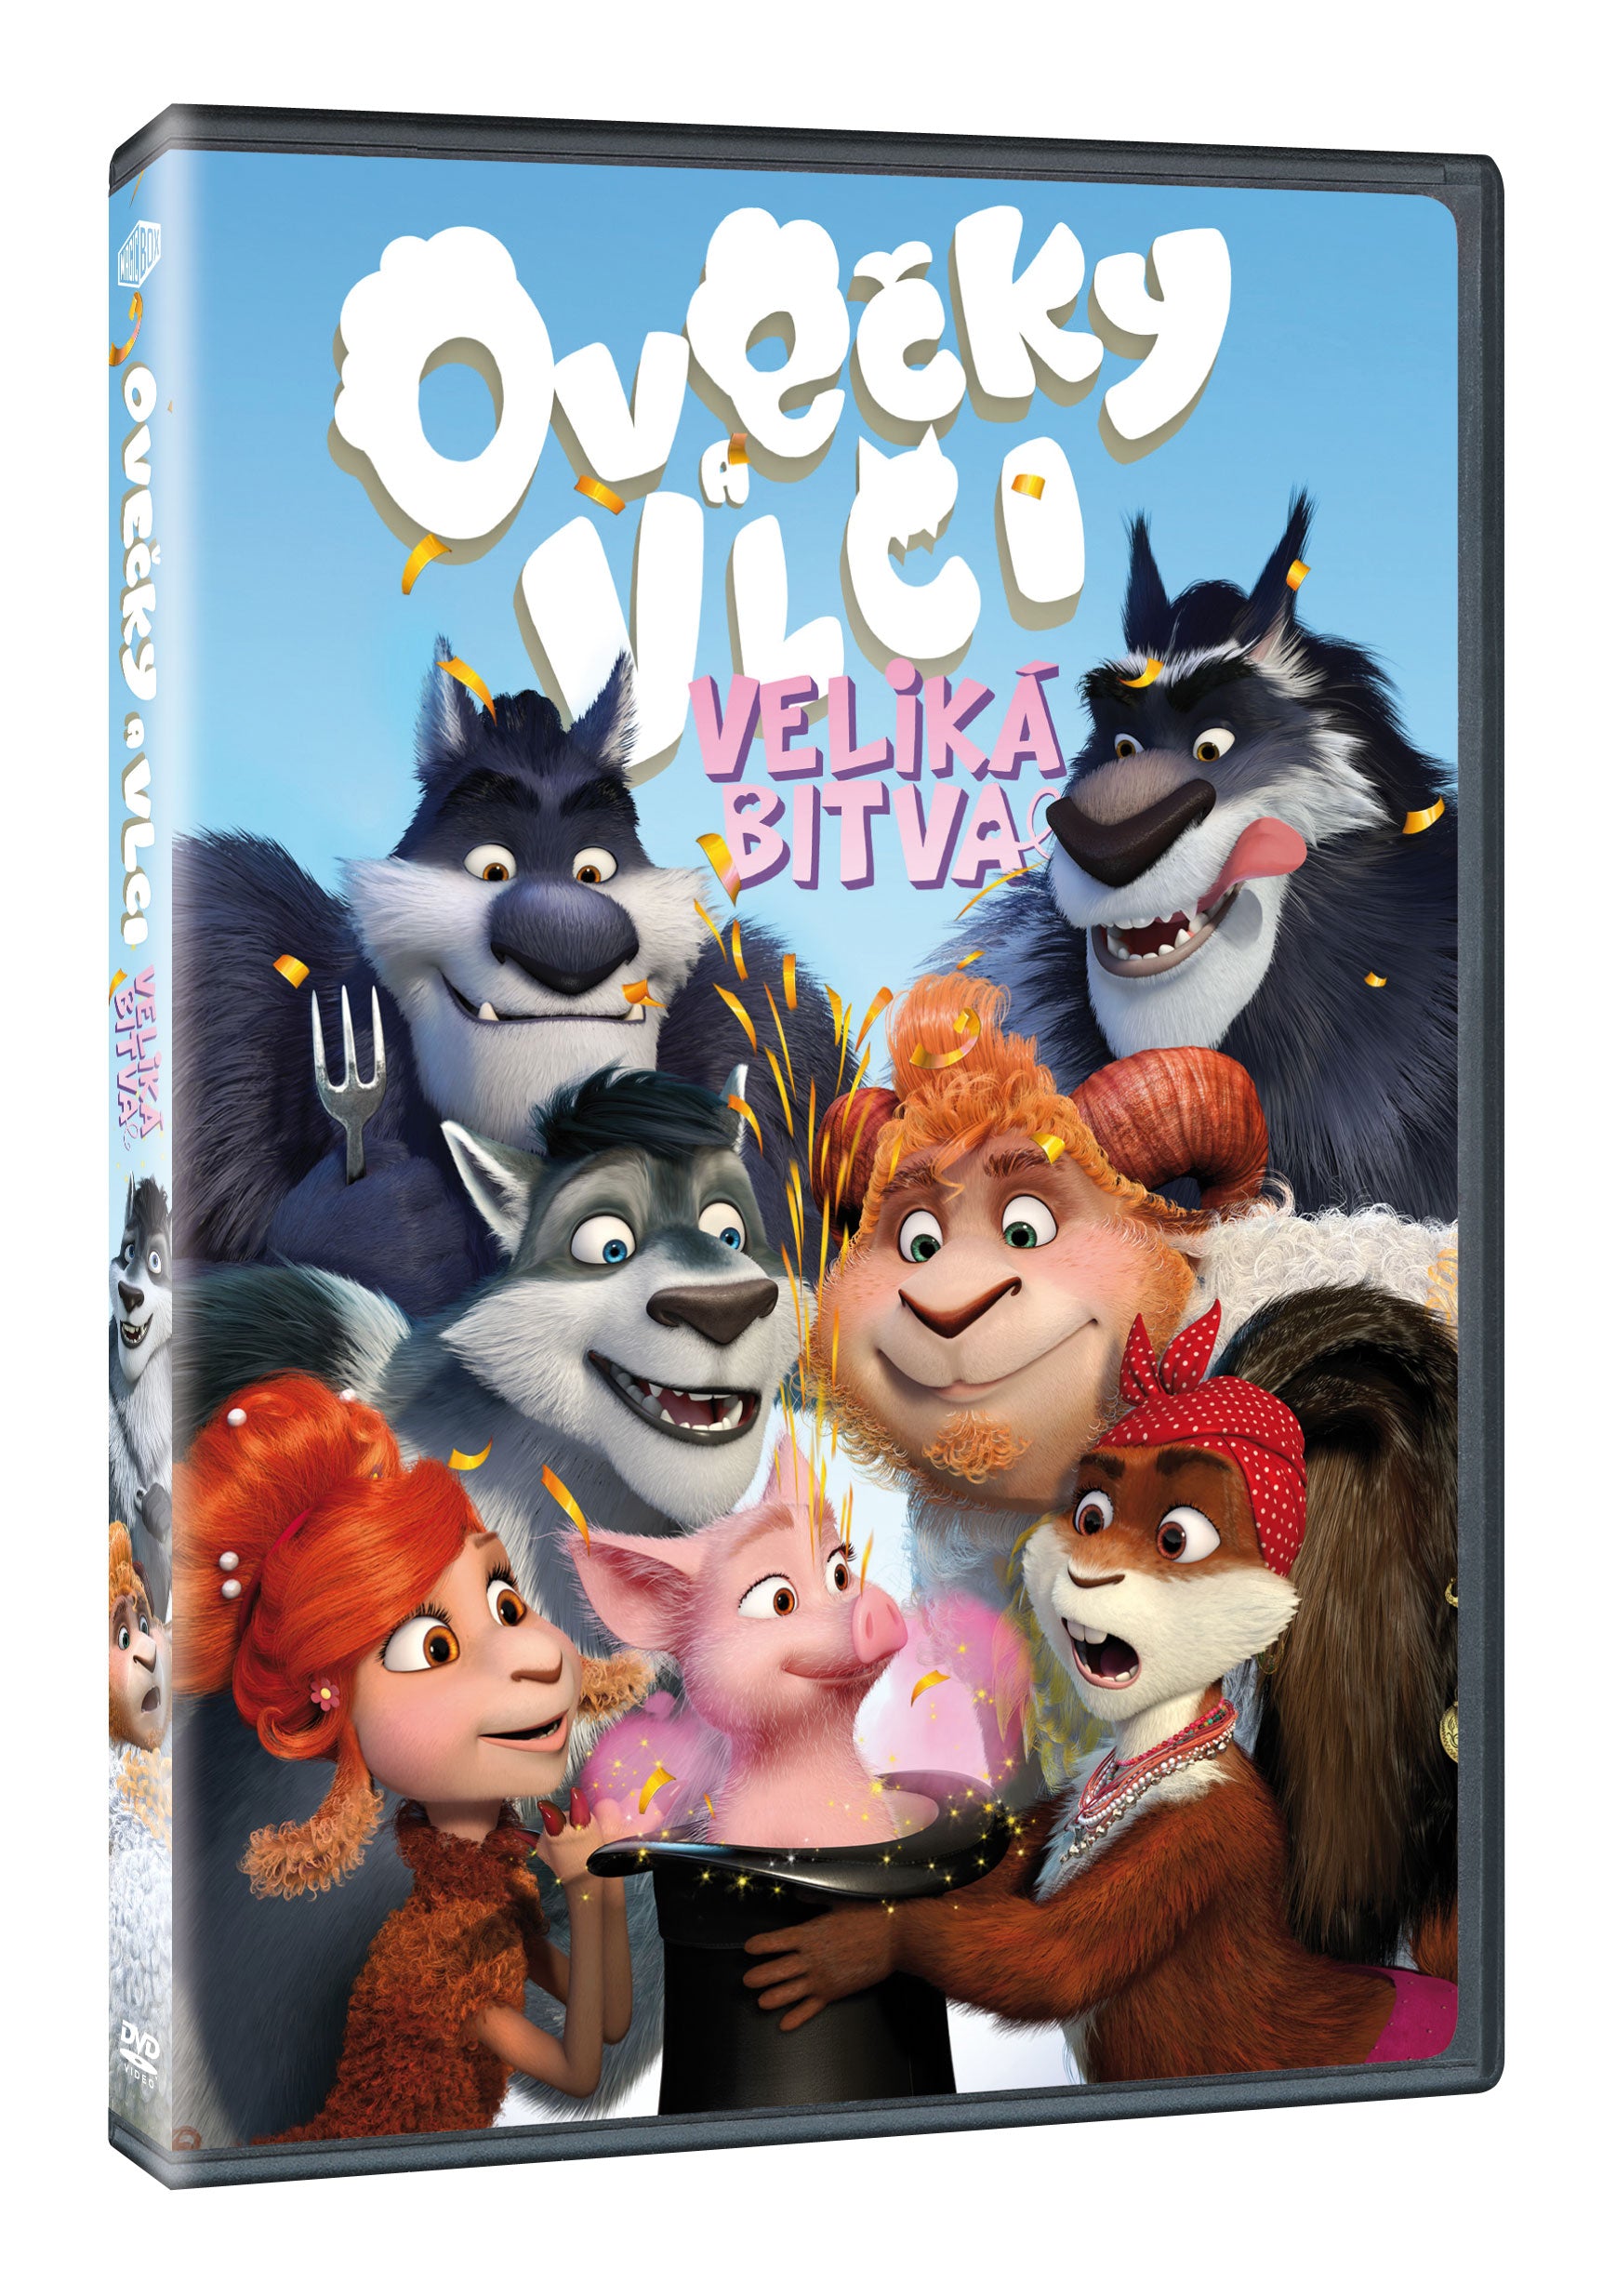 Ovecky a vlci: Velika bitva DVD / Volki i ovcy: Chod svinoj